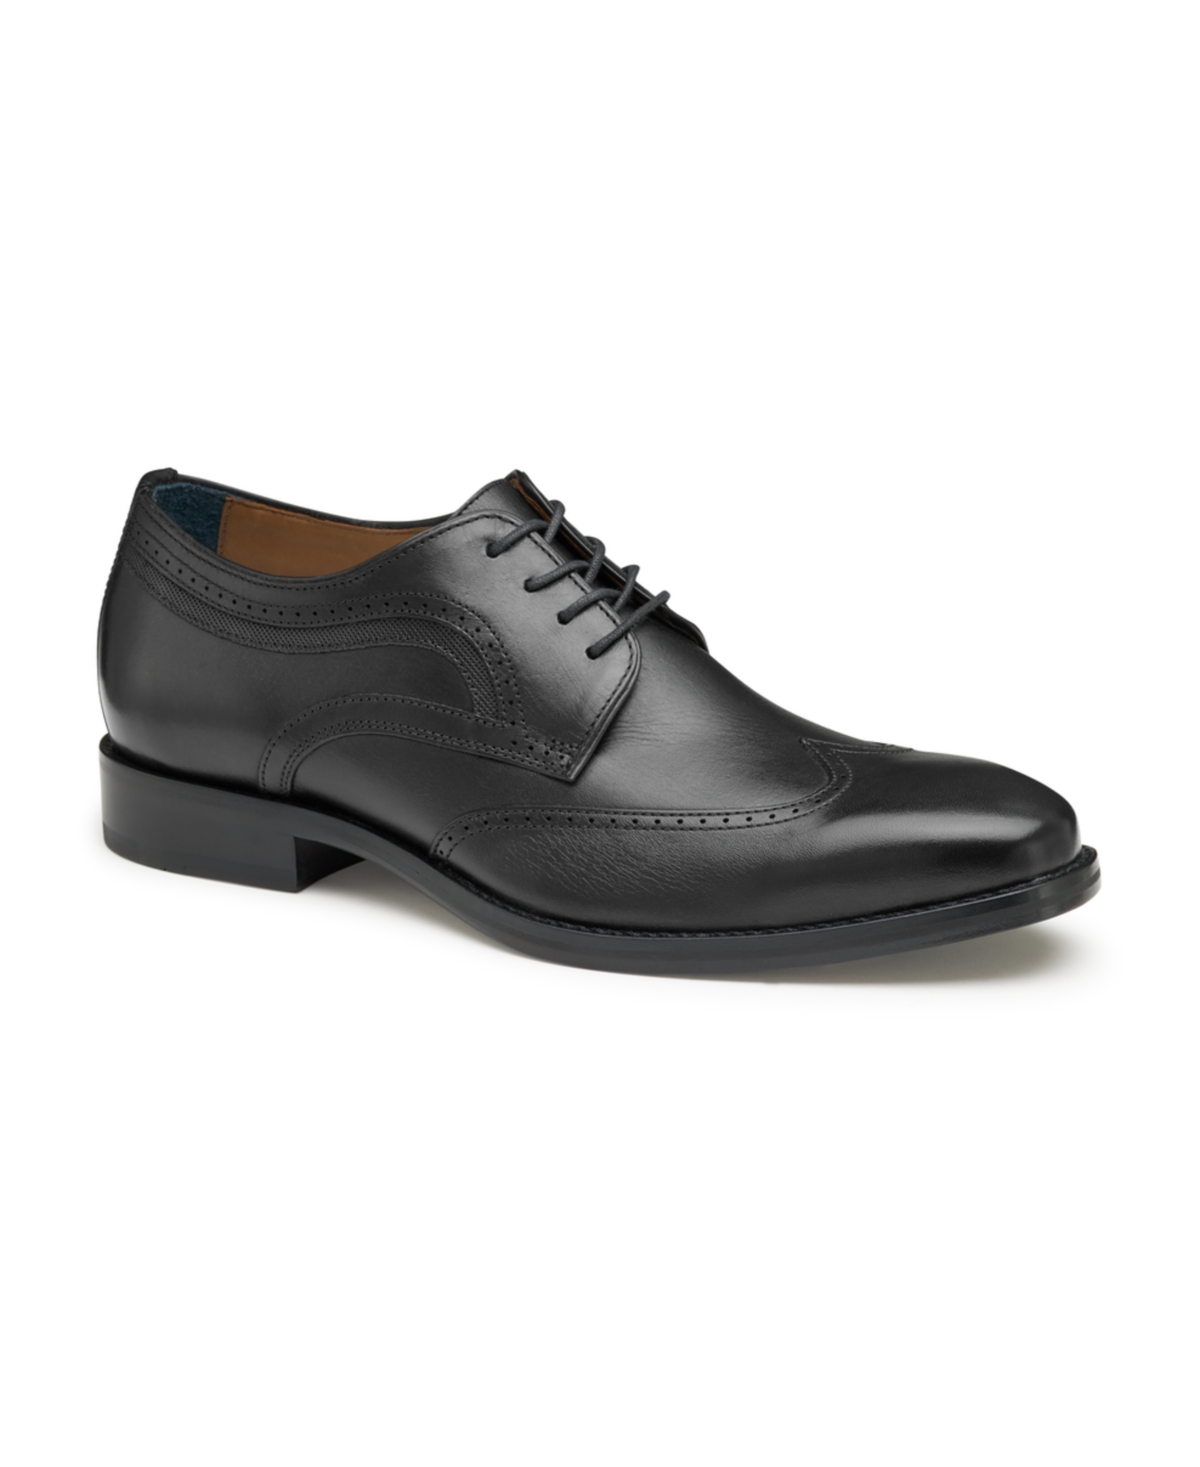 Men's Danridge Wingtip Dress Shoes - Black